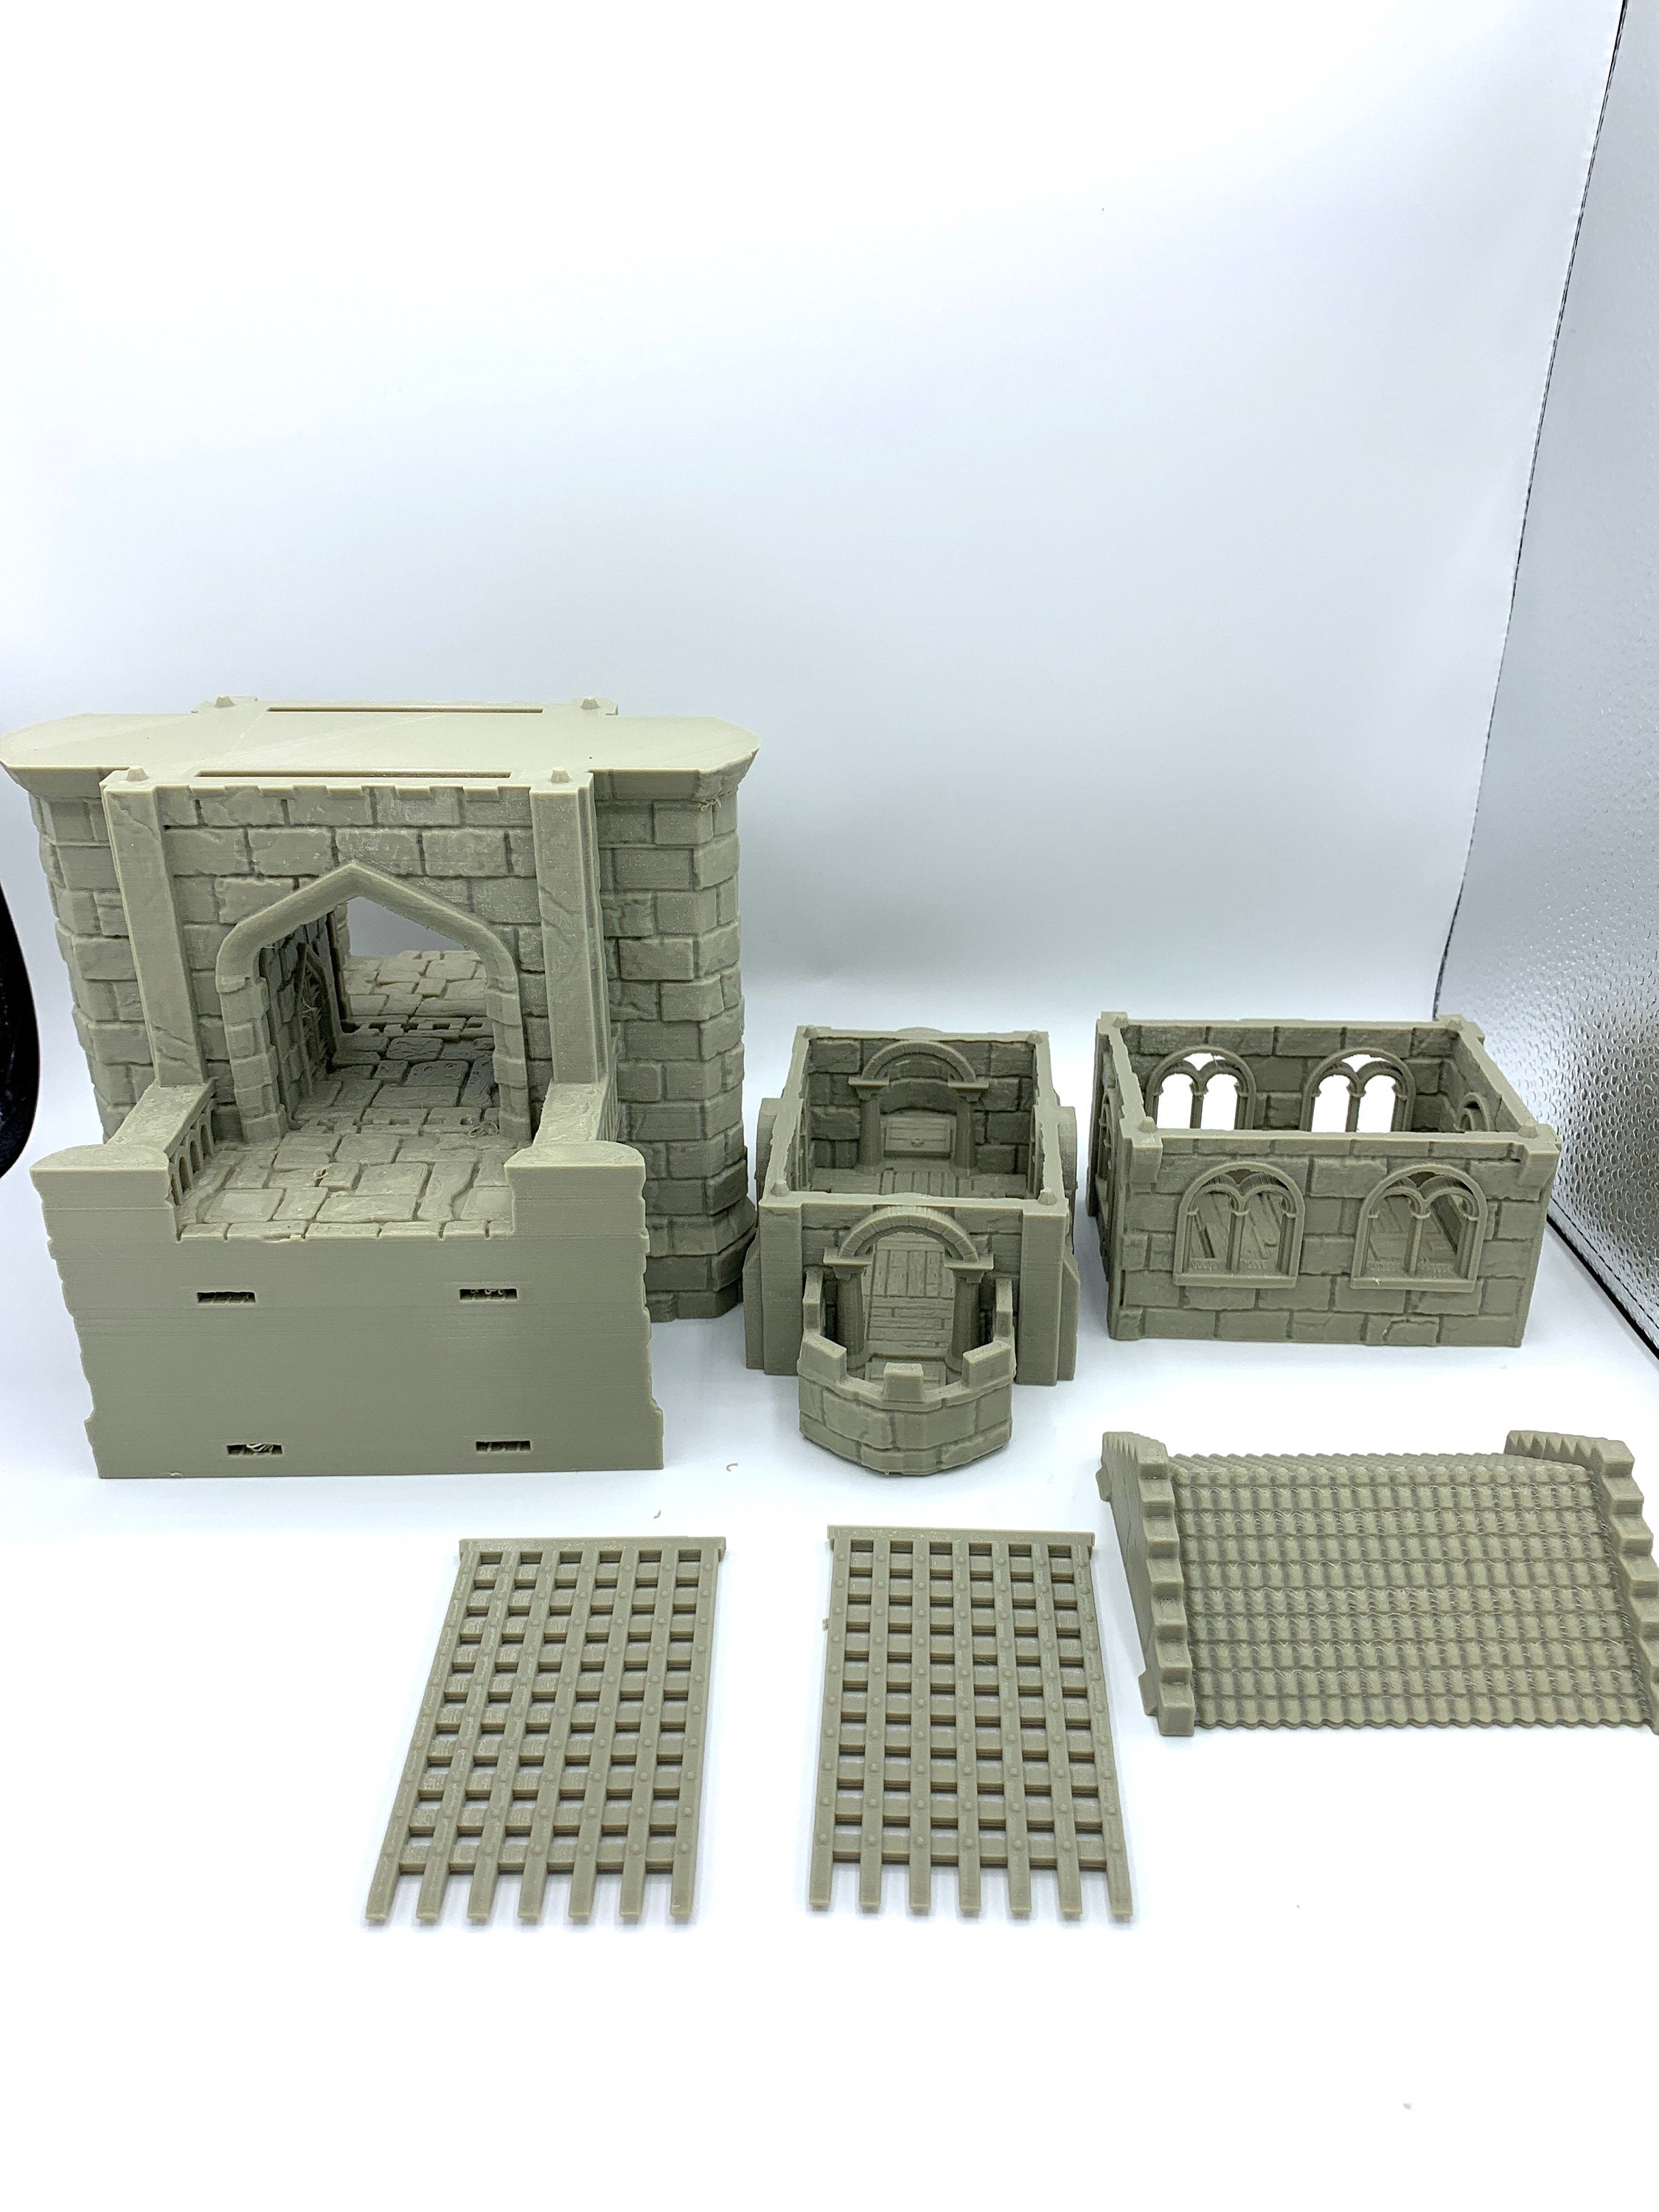 Arkenfel Modular Bridge GateHouse / Dark Realms Terrain / RPG and Wargame 3d Printed Tabletop Terrain / Licensed Printer